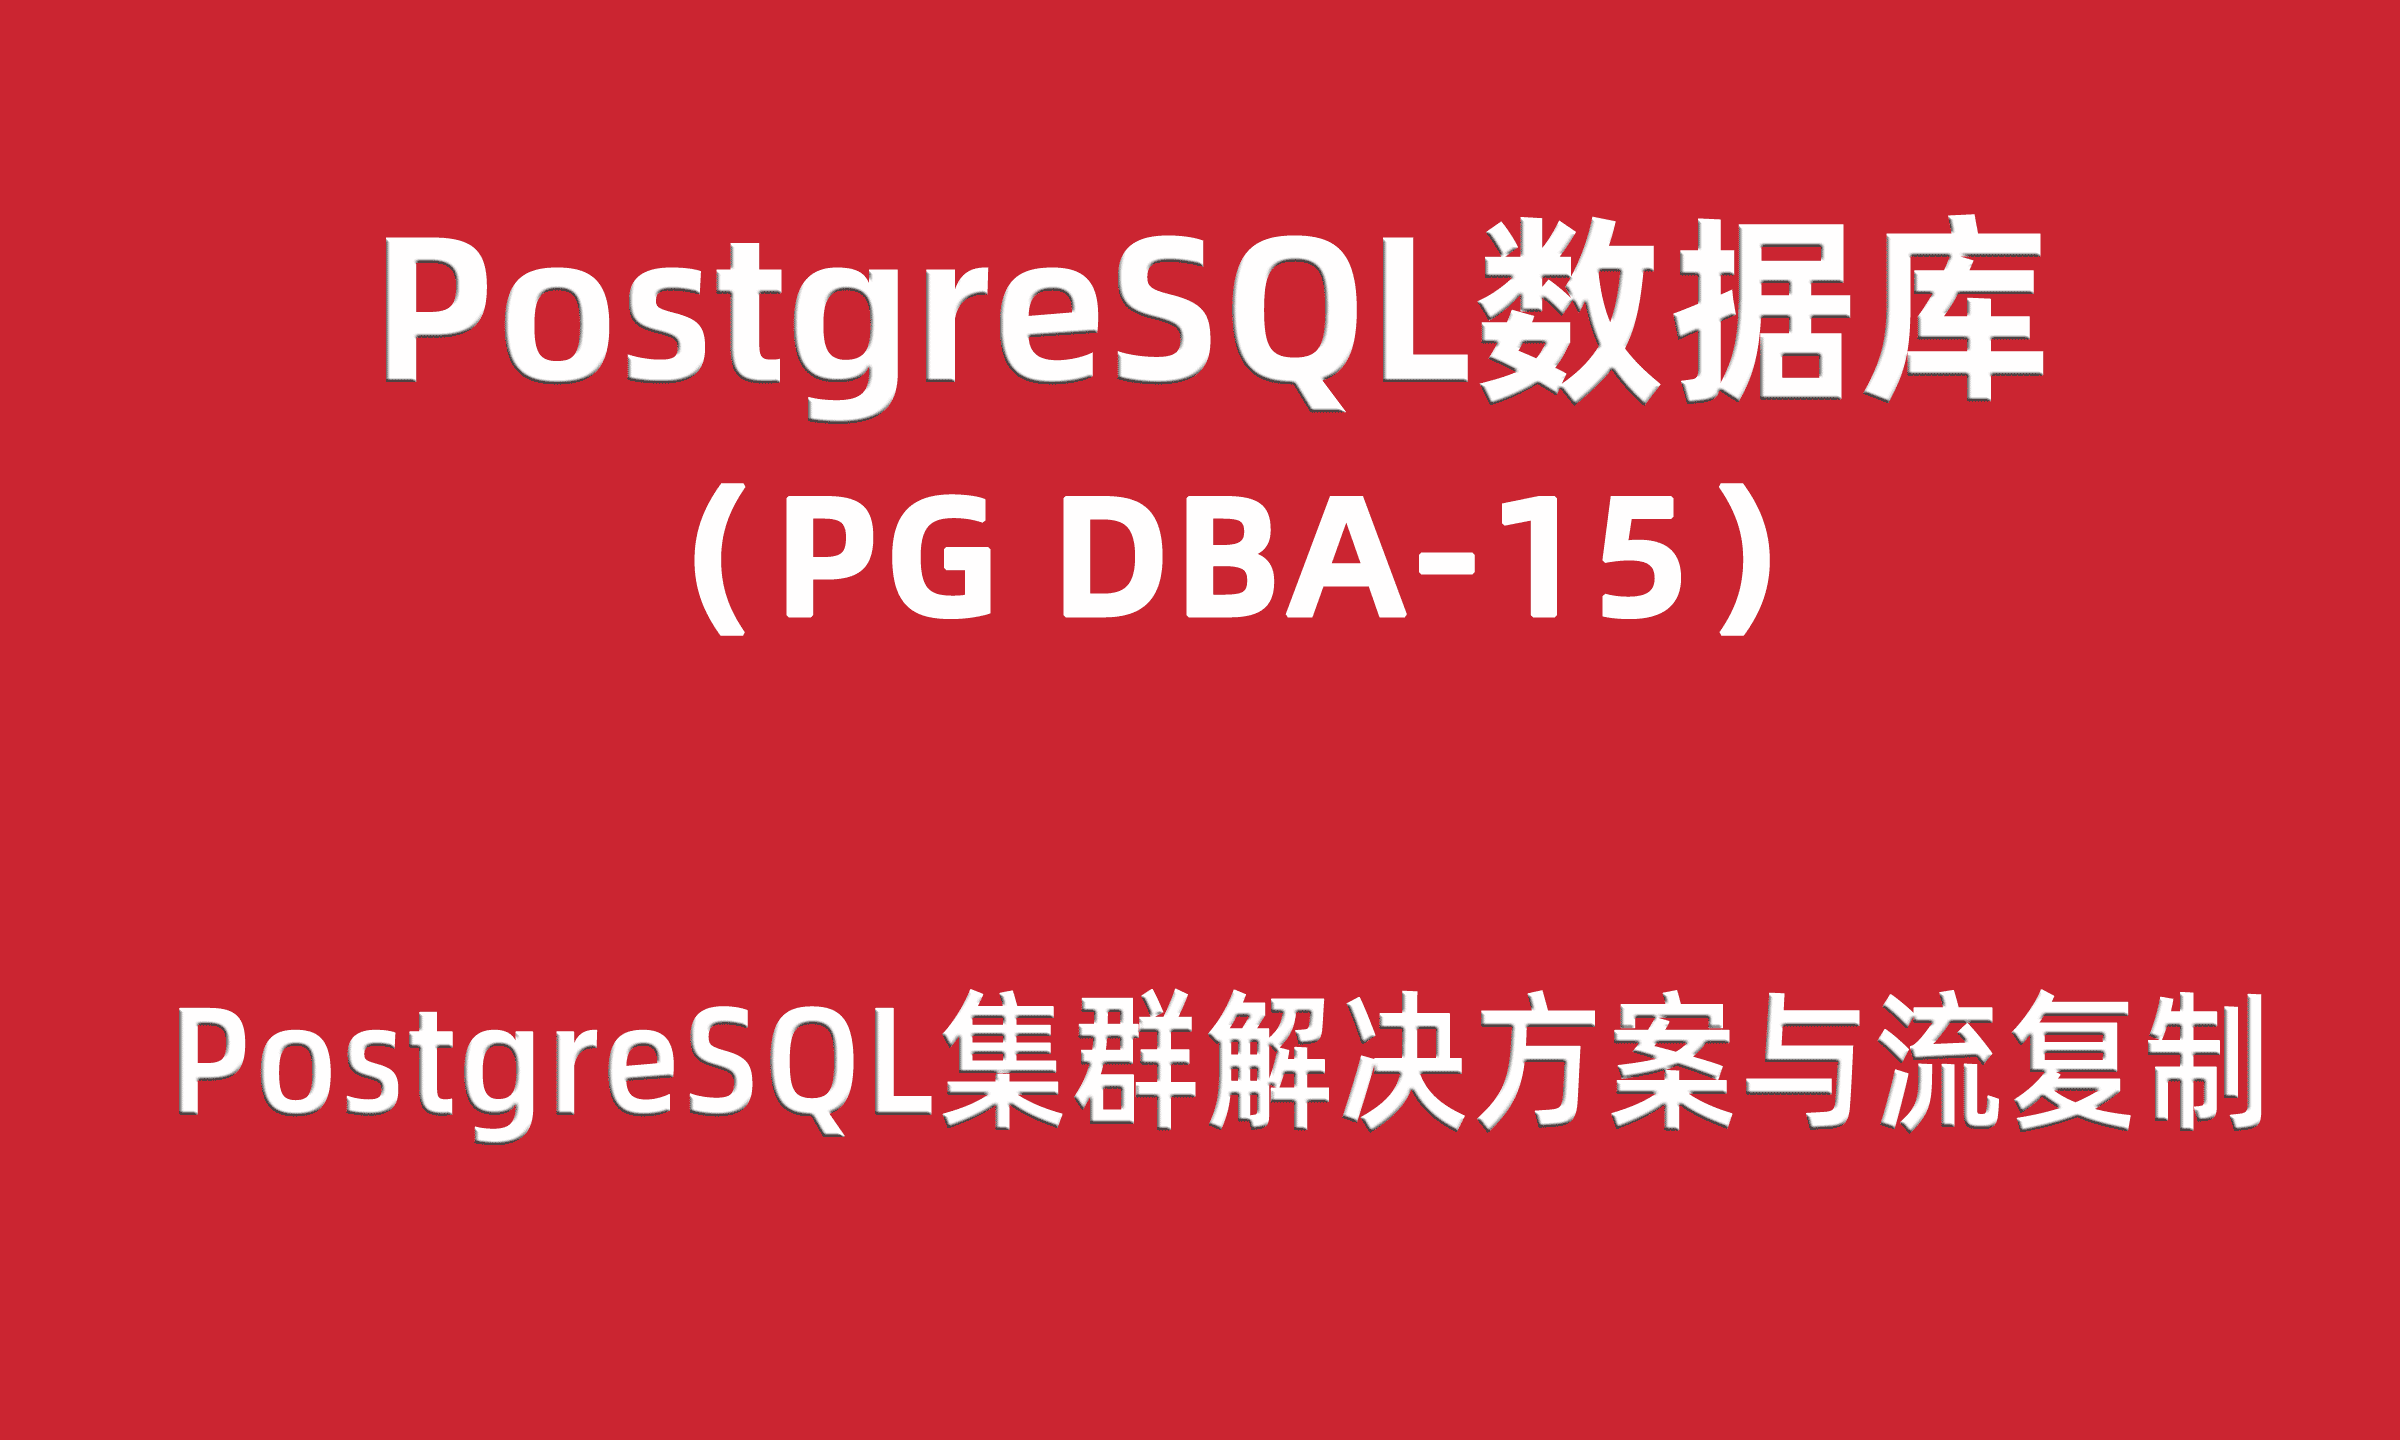  PG-DBA Training 15: PostgreSQL Cluster Solution and Stream Replication Project